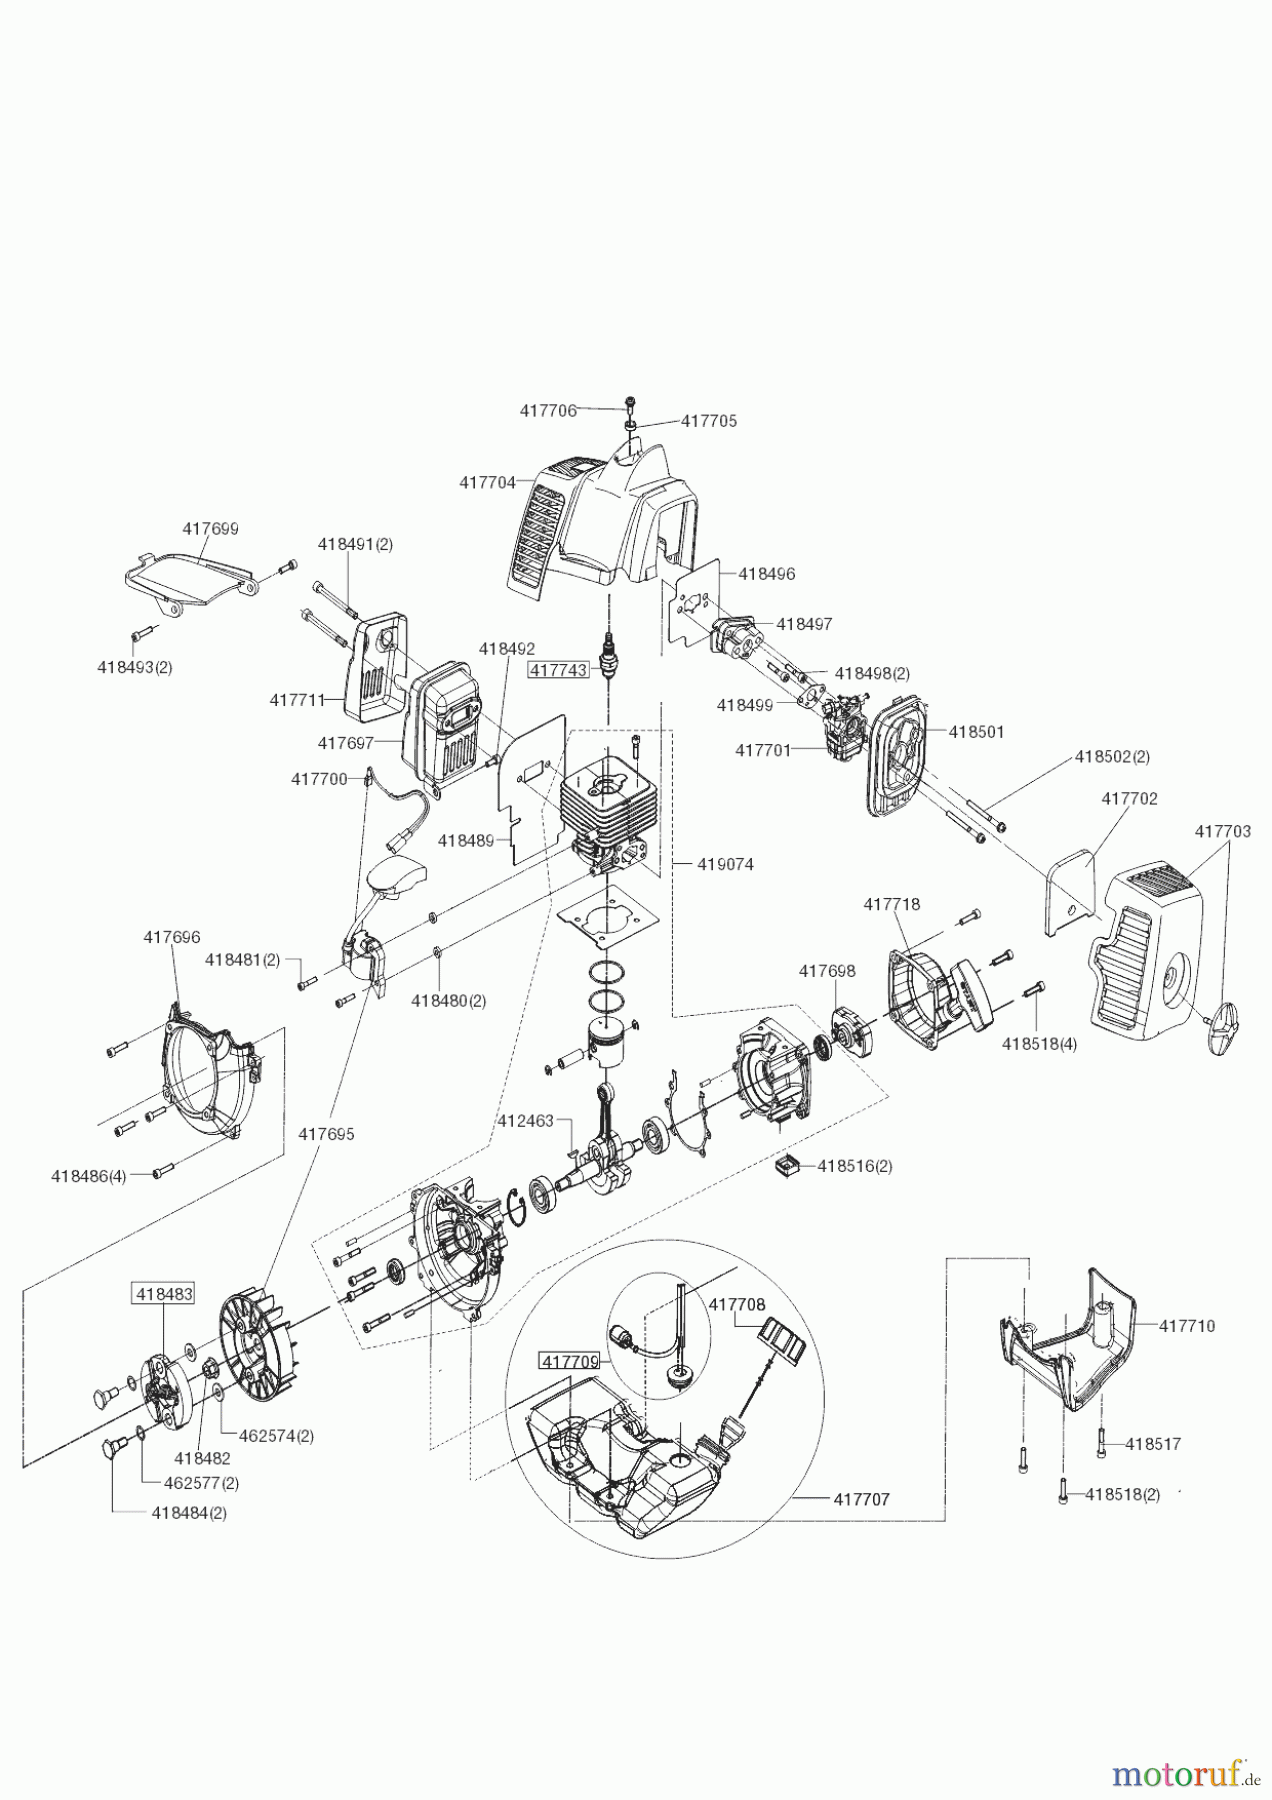  AL-KO Gartentechnik Motorsensen BC 330 L  12/2019 Seite 1